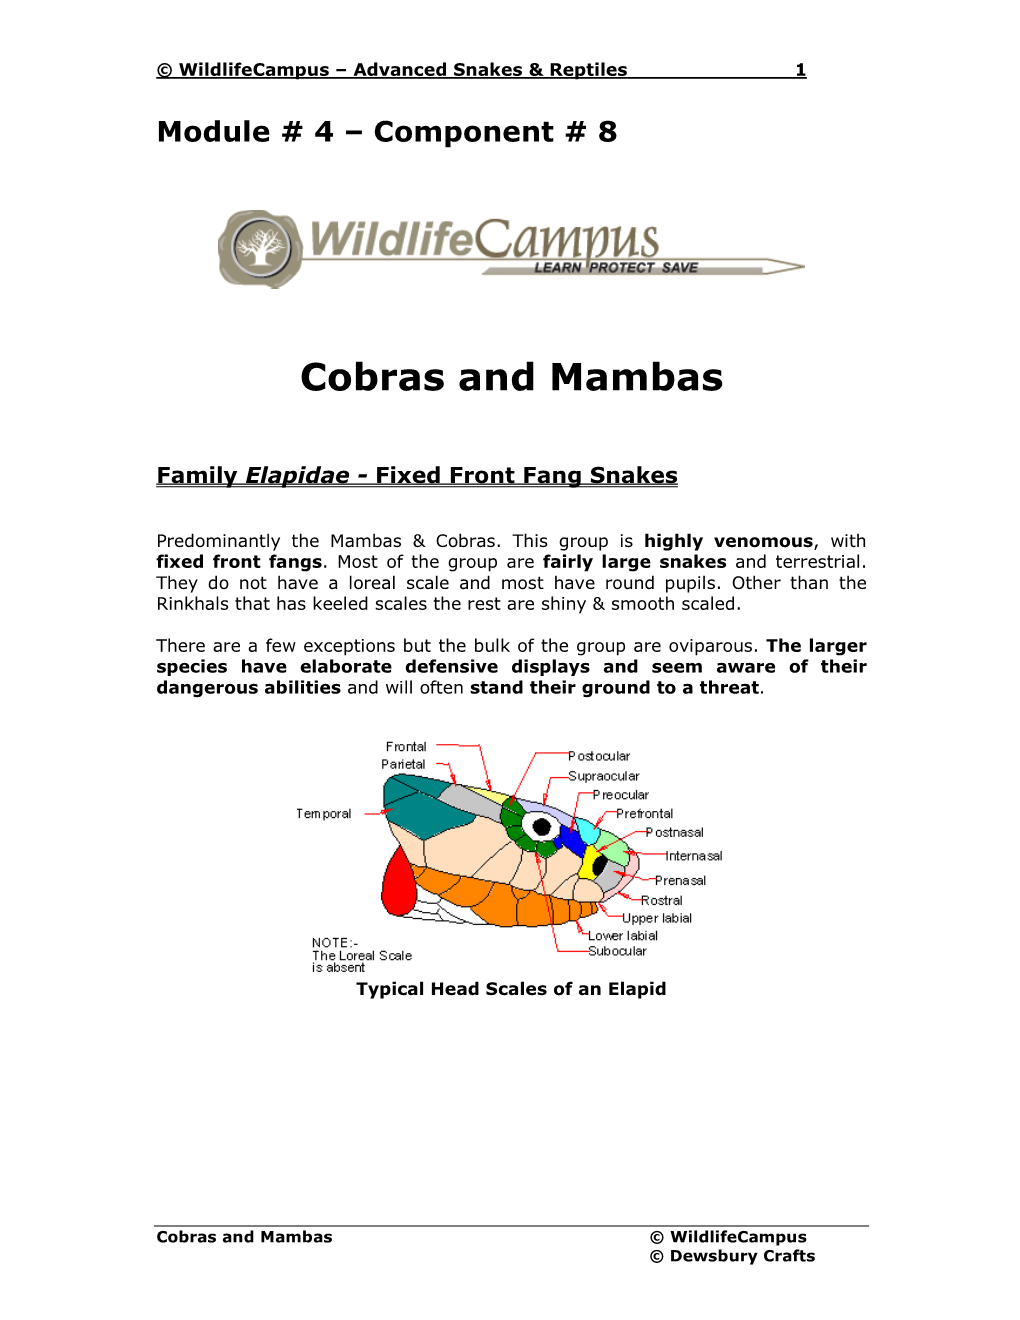 Cobras and Mambas